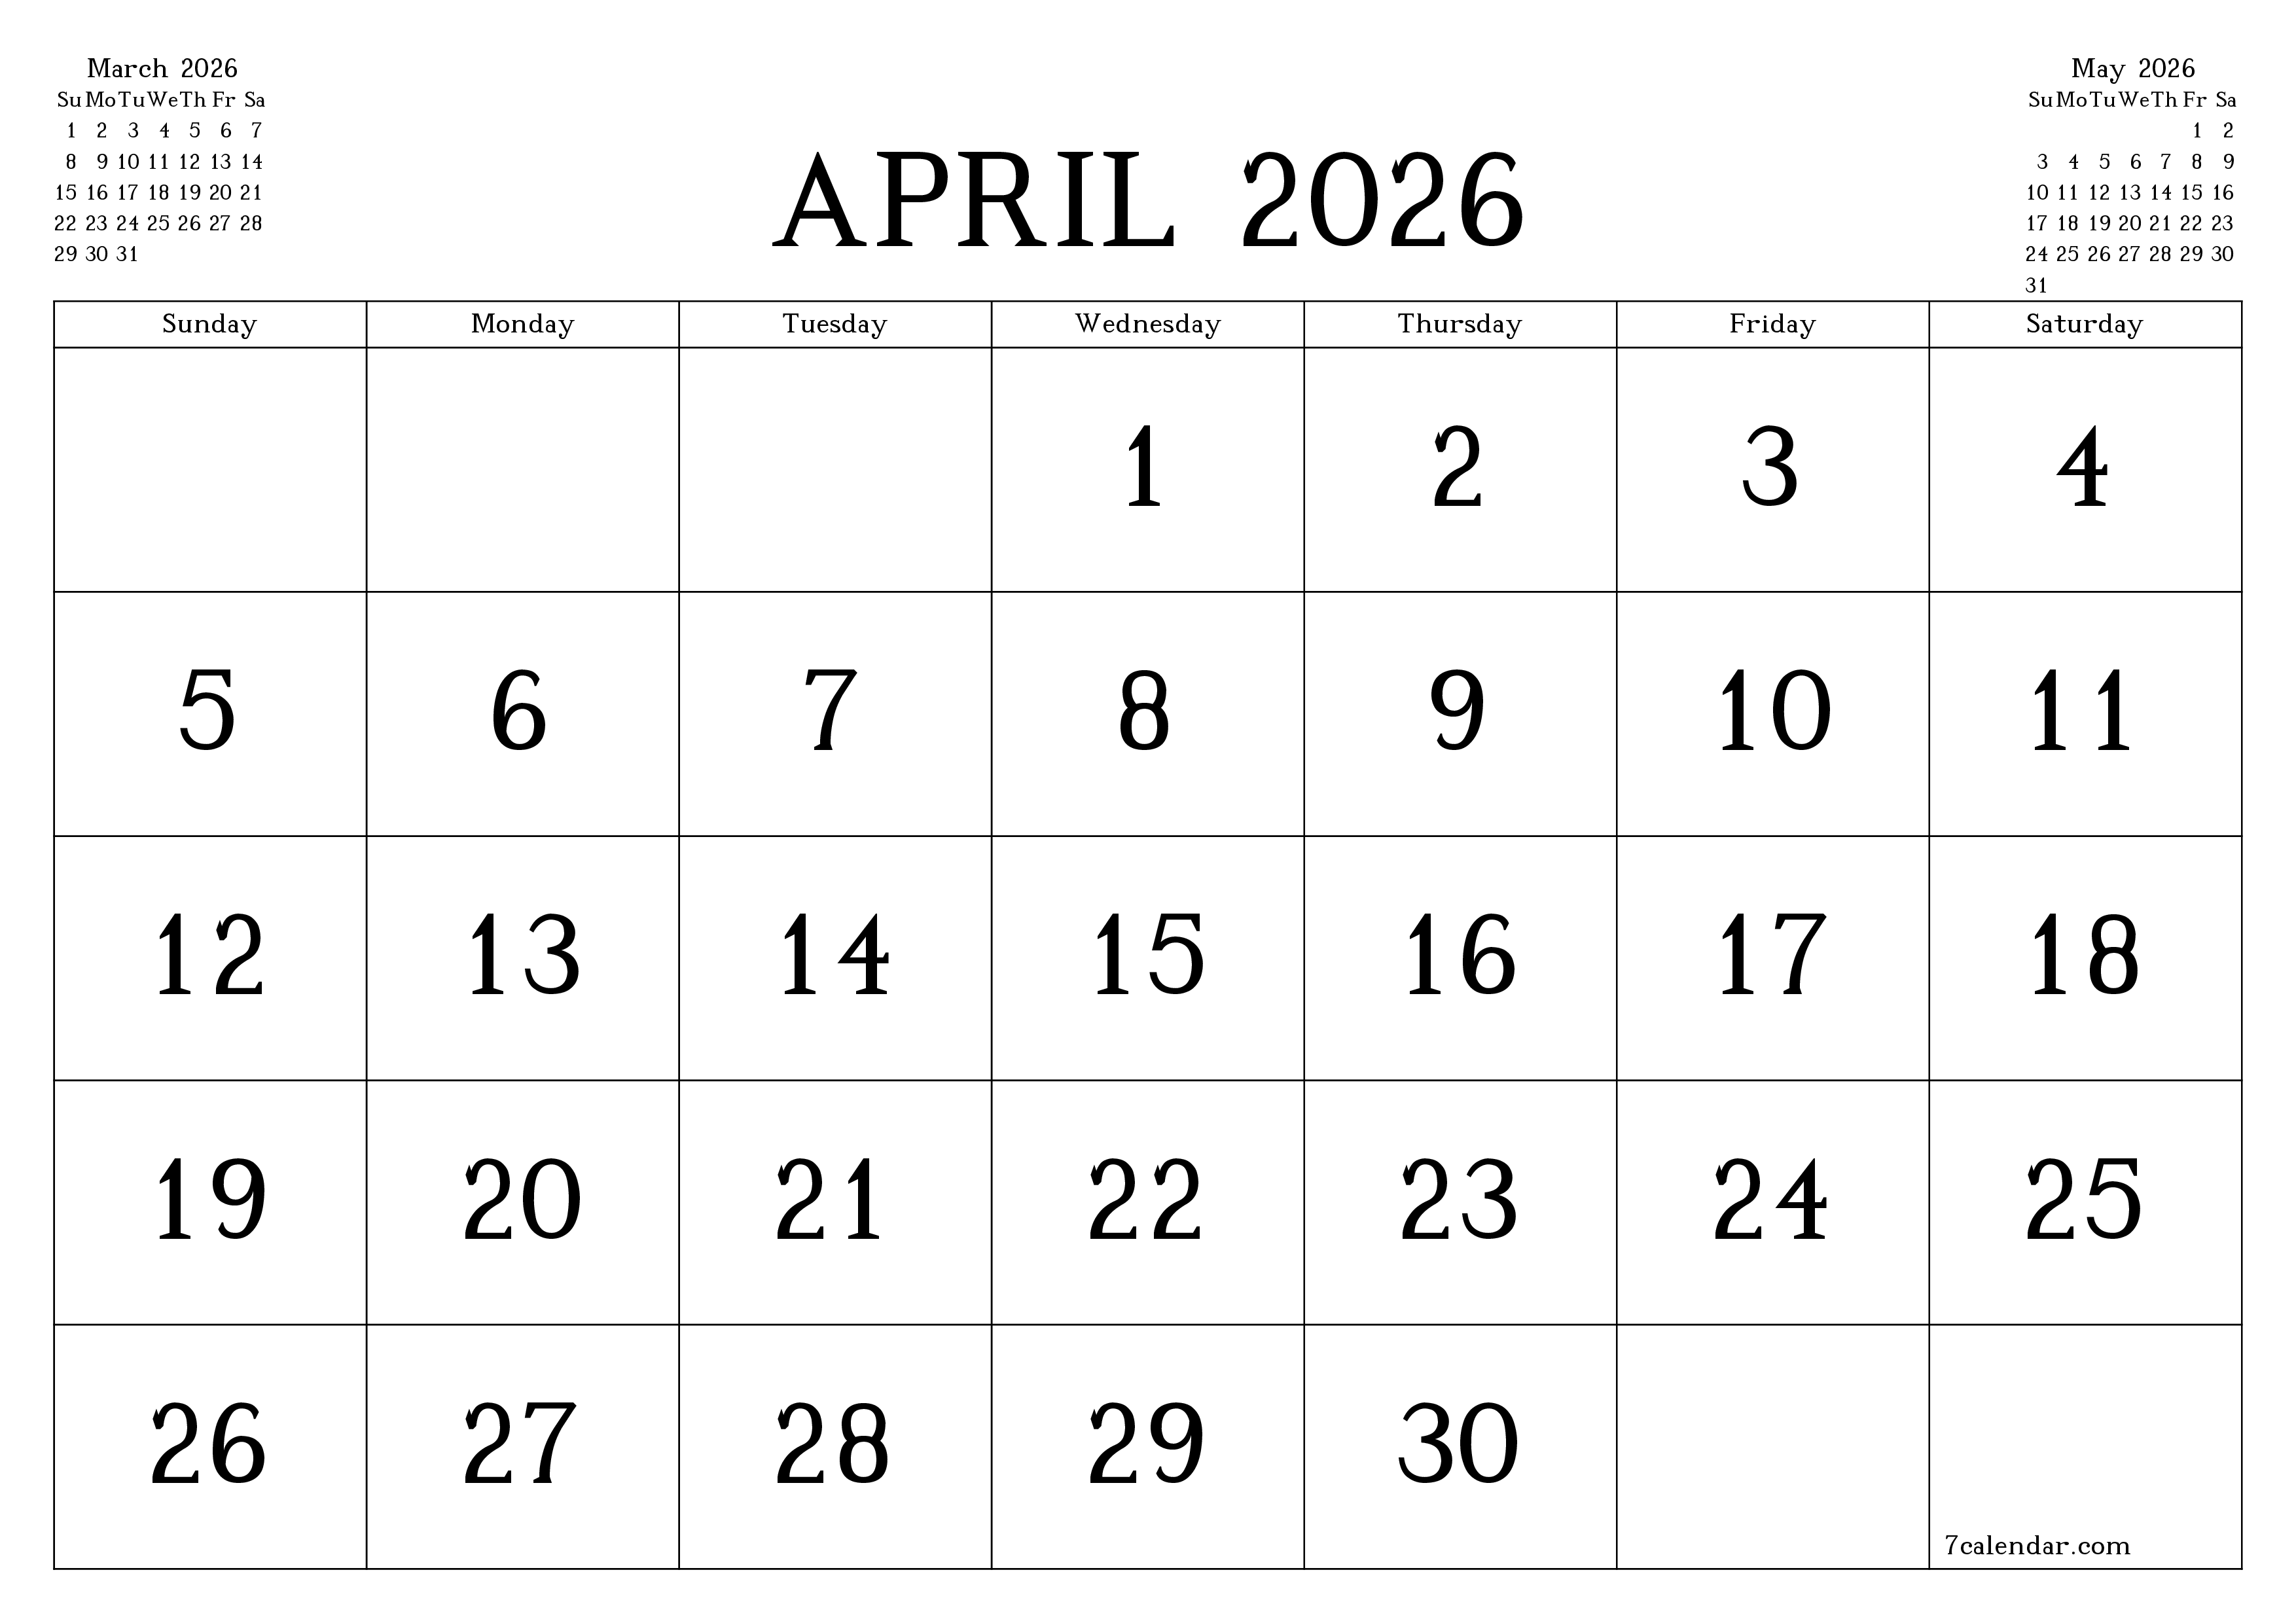 Blank calendar April 2026